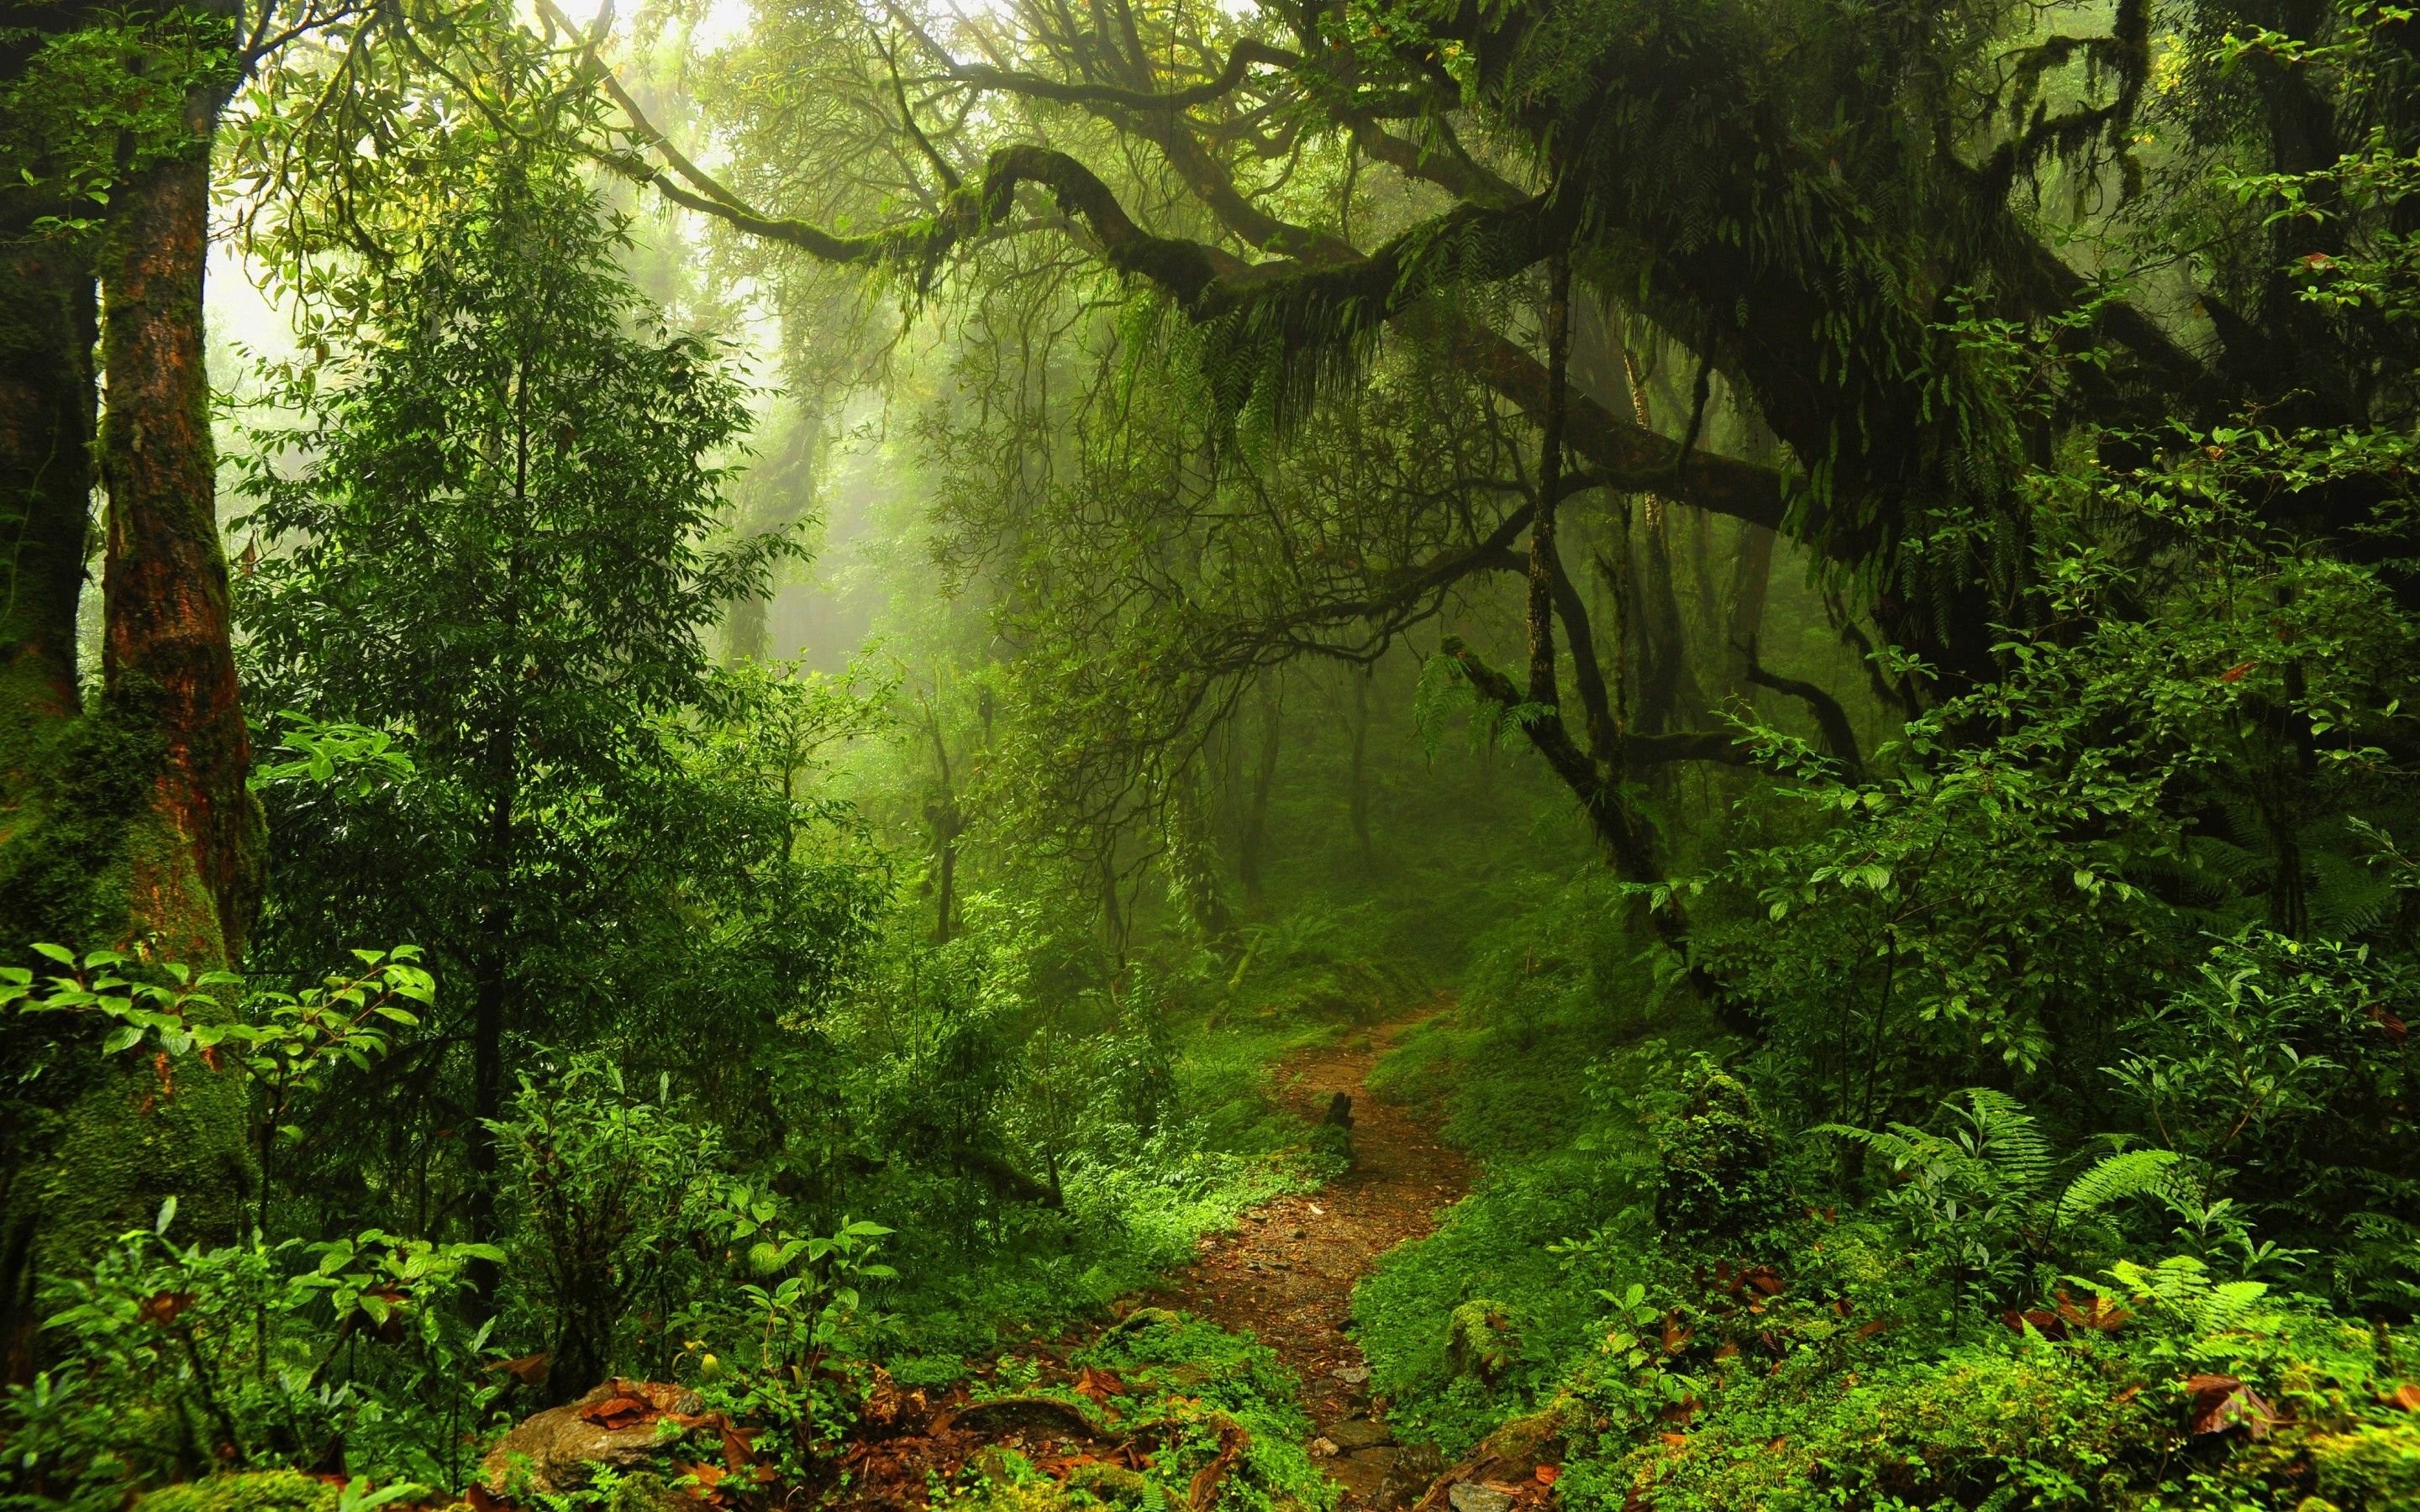 General 2880x1800 nature trees forest leaves lianas mist moss path plants ferns rainforest jungle